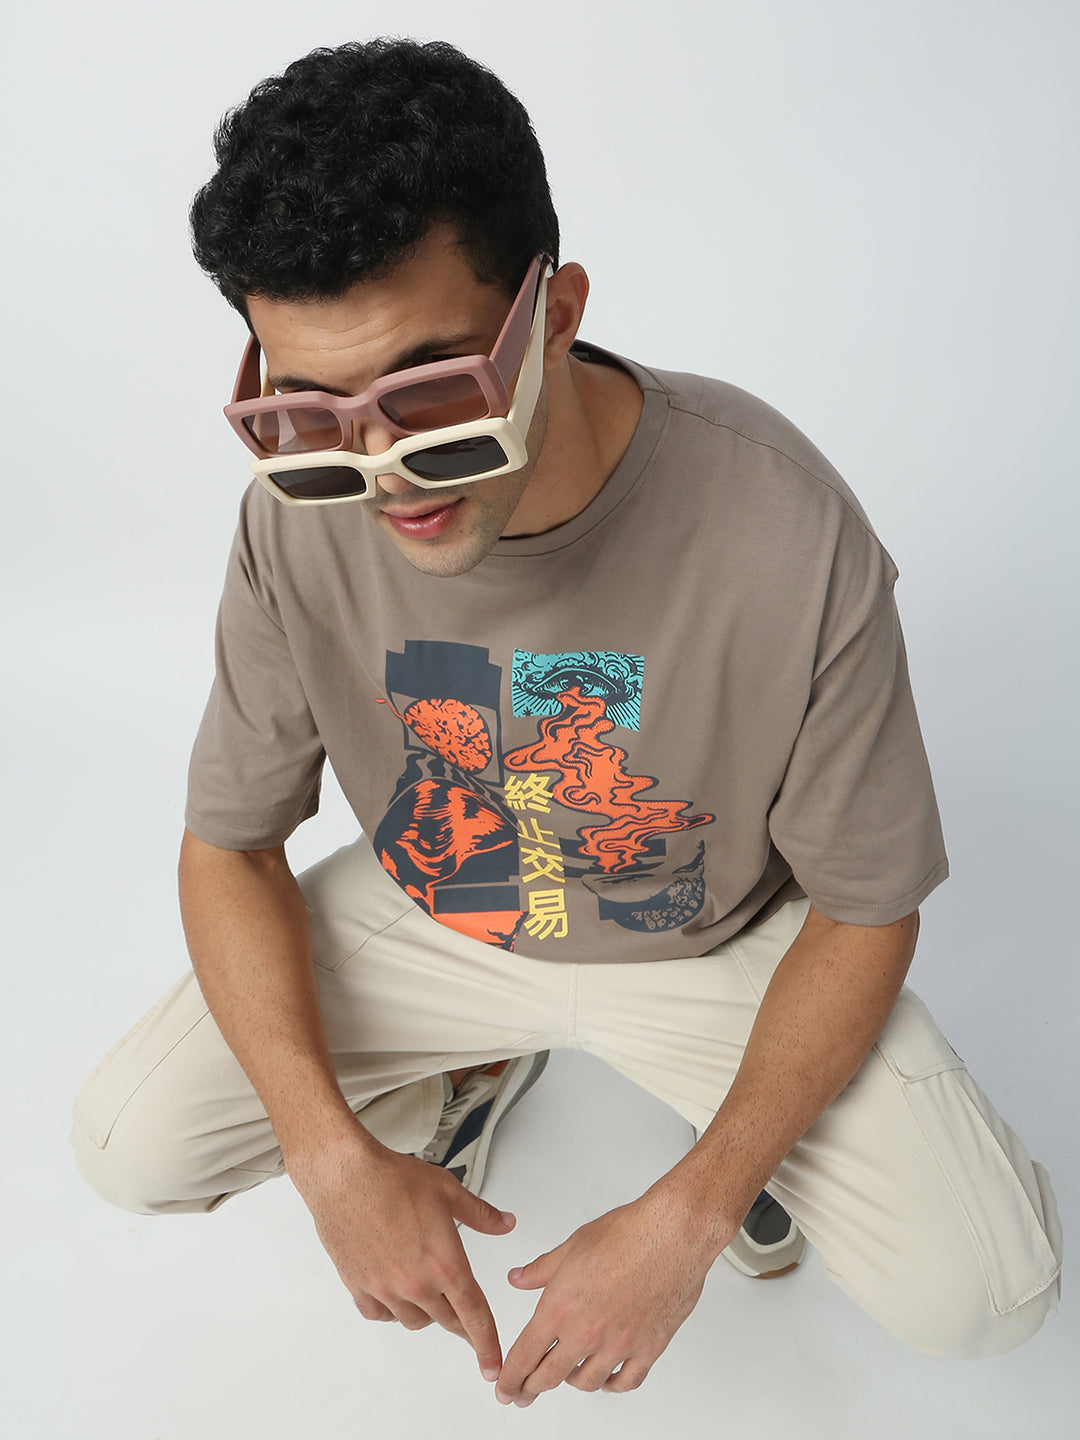 Buy Blamblack Men's Oversize Beige Color Round Neck Printed T-Shirt